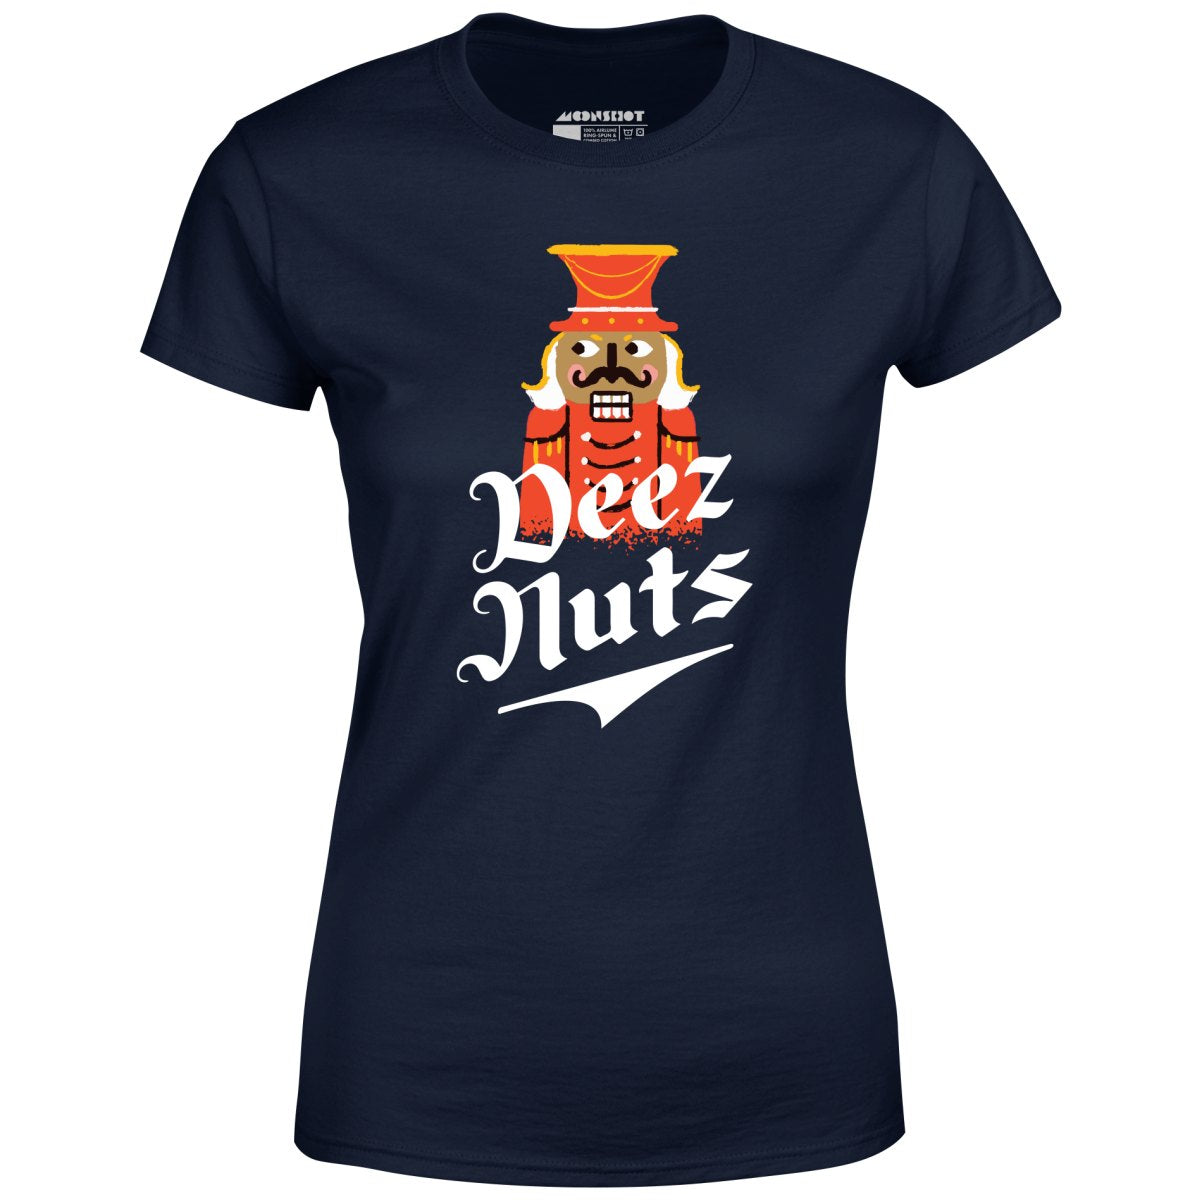 Deez Nuts Nutcracker - Women's T-Shirt